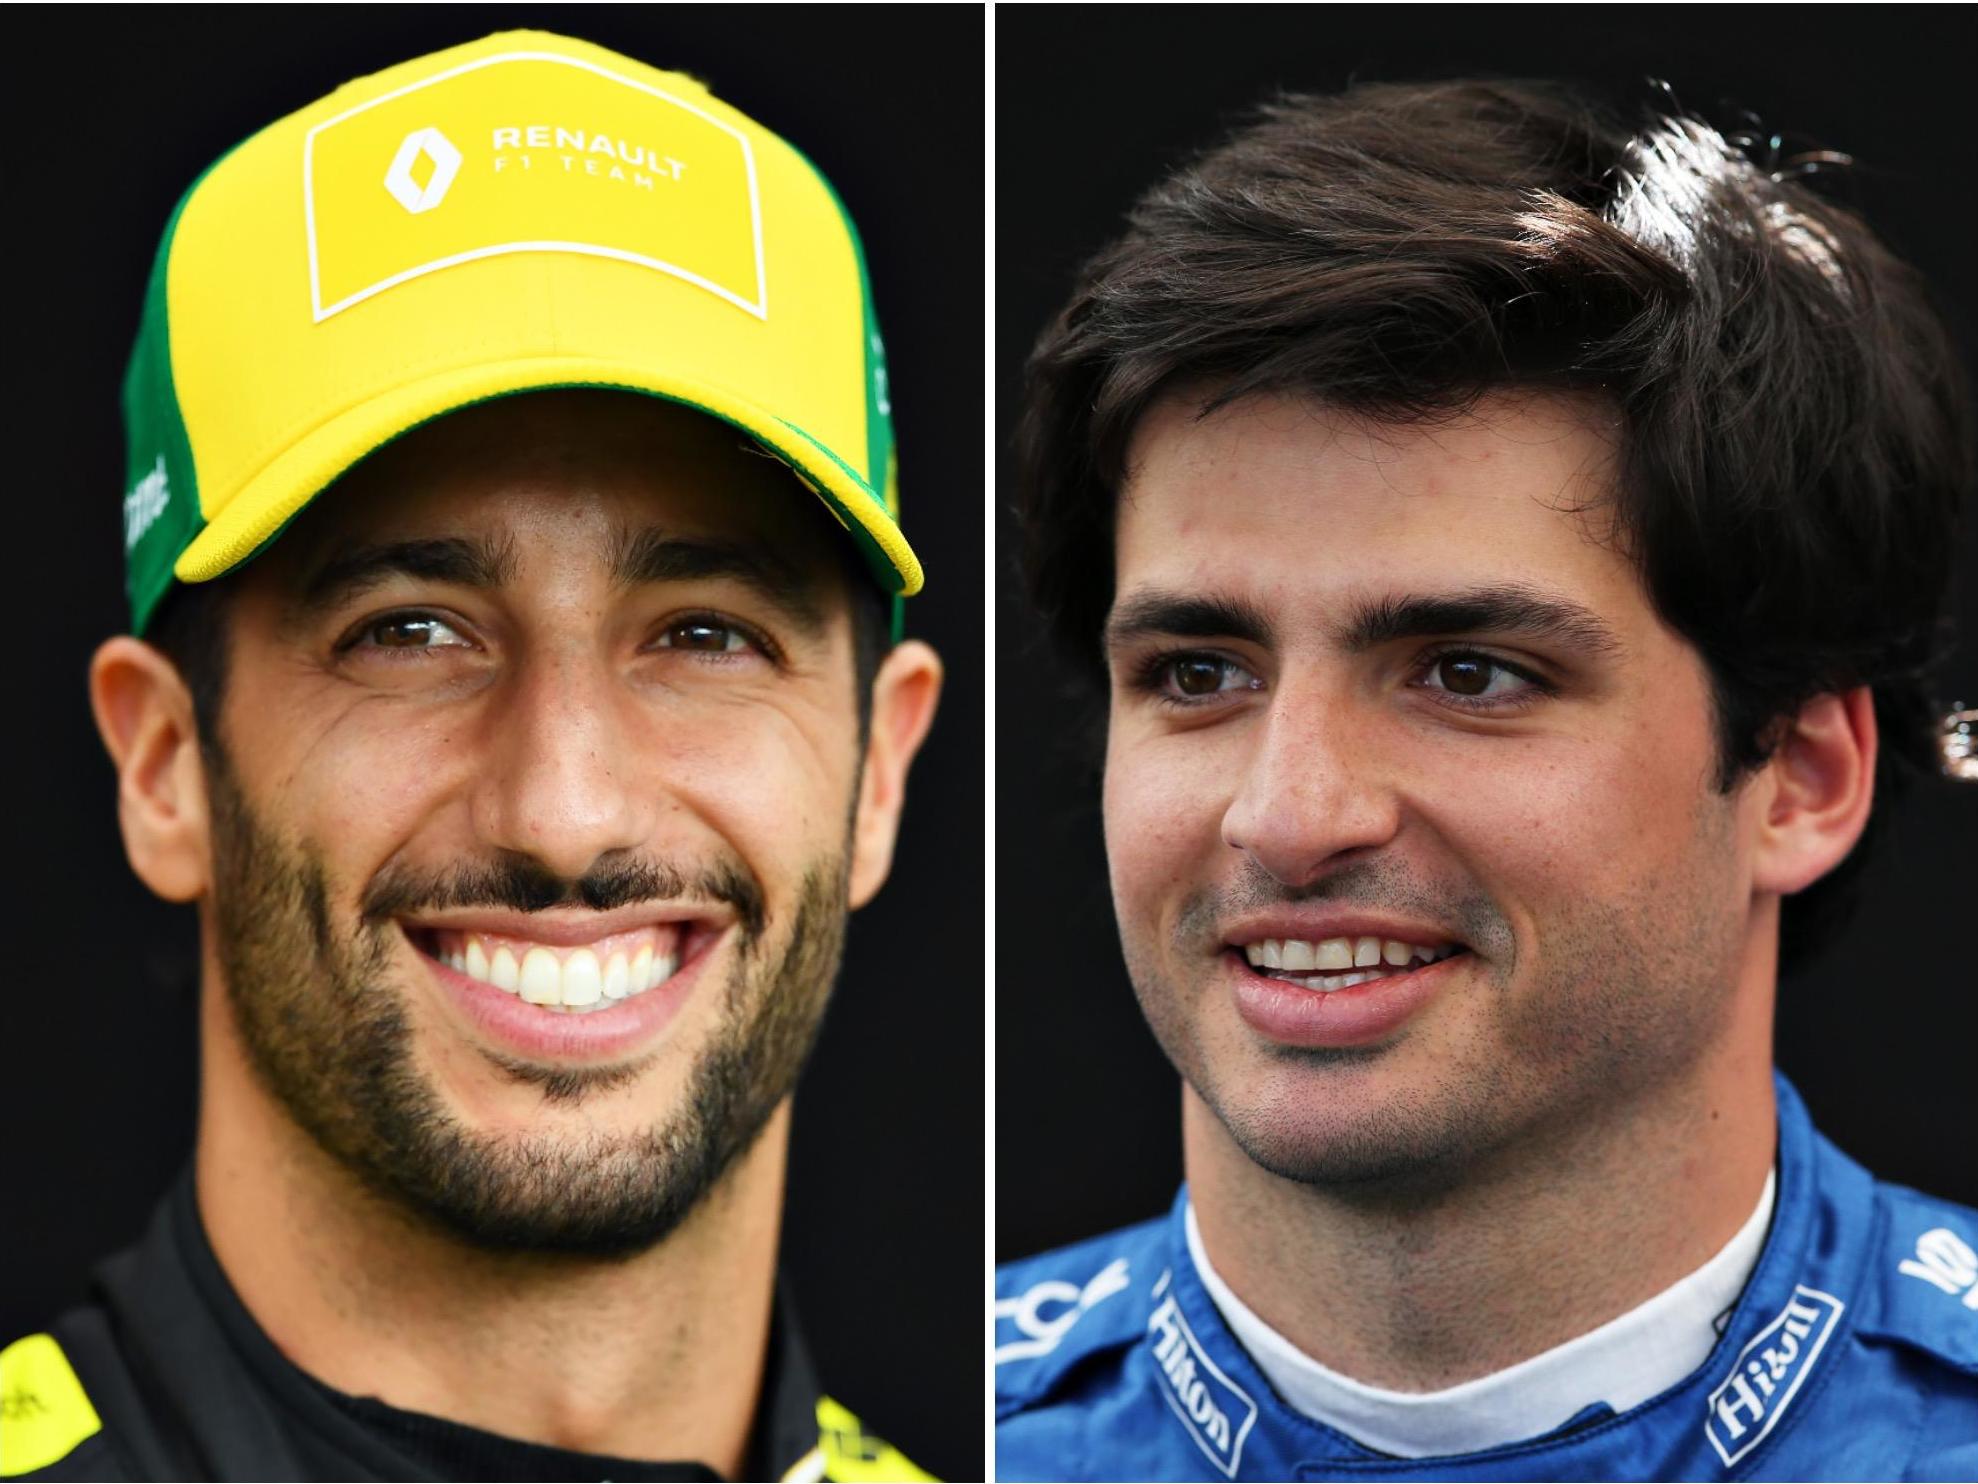 Daniel Ricciardo will replace Carlos Sainz at McLaren next season